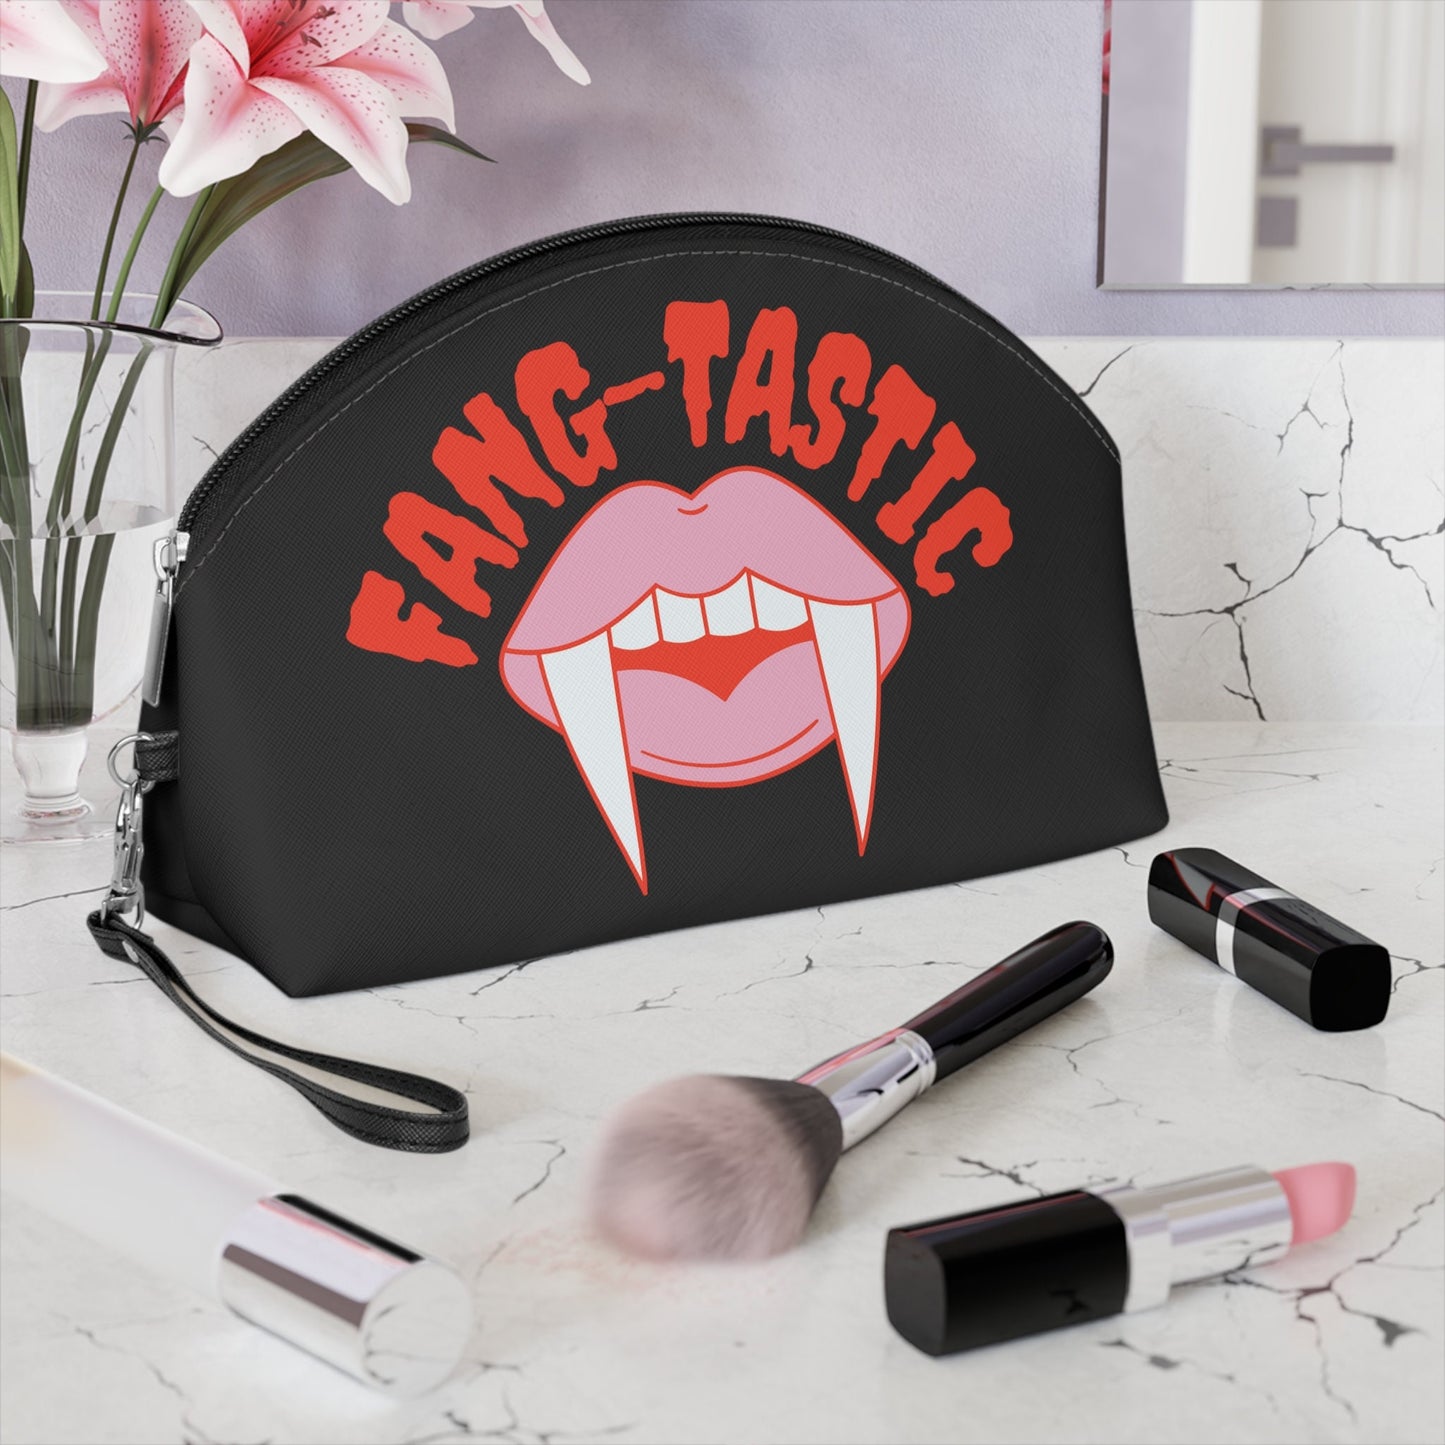 Spooky Cute Fang Bag Vampire Makeup Purse Cosmetics Pouch Toiletries Halloween Wristlet Fang-tastic Cosmetologist Esthetician Costume Clutch